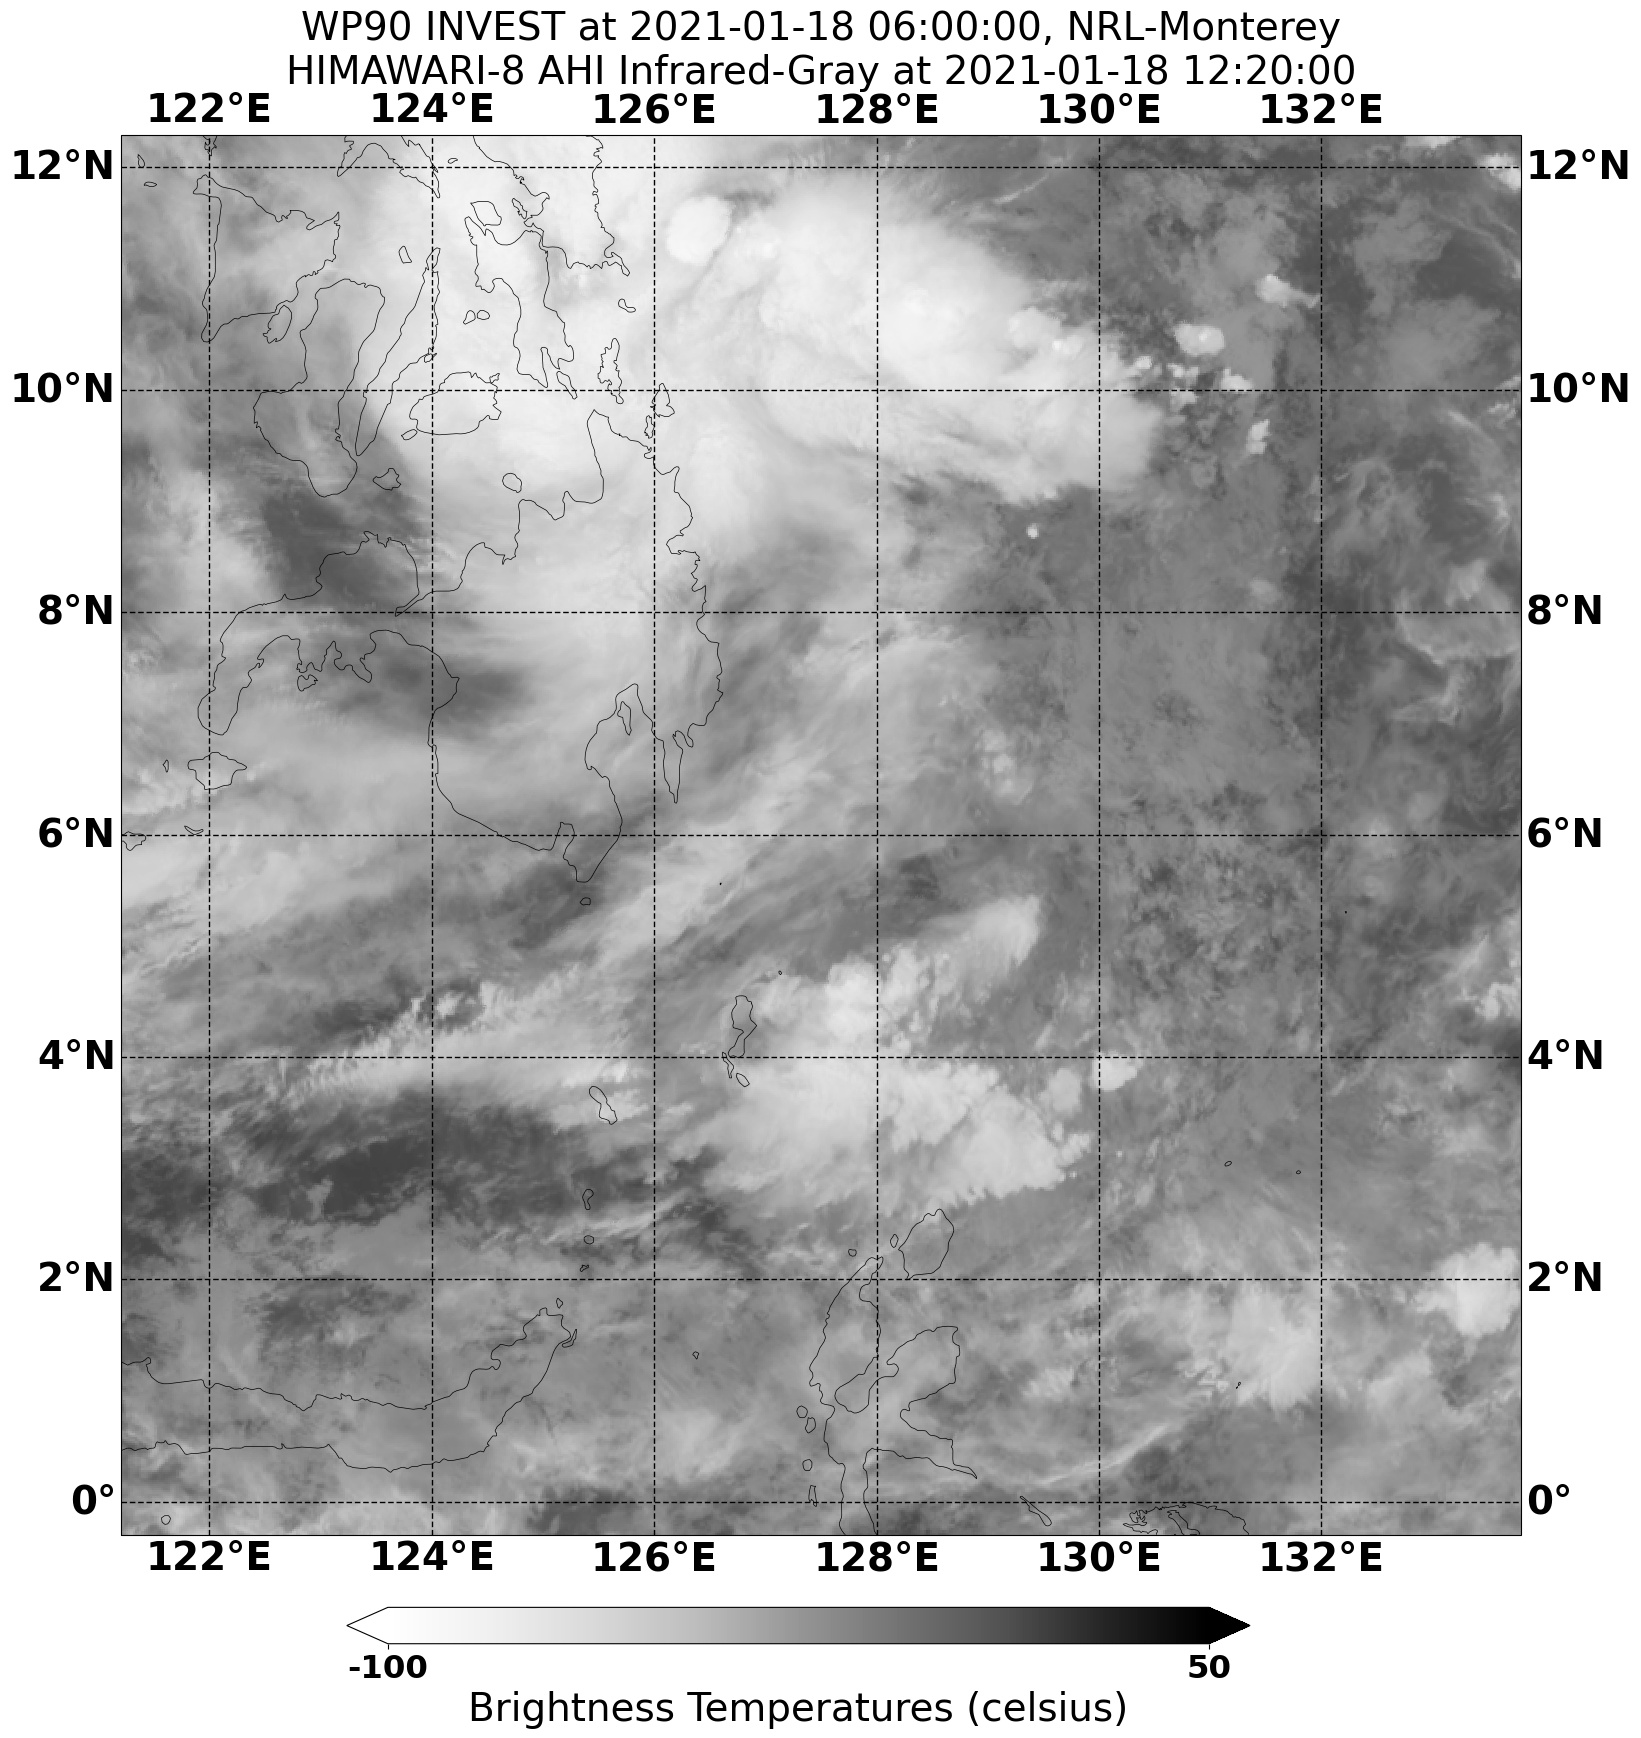 20210118.122000.WP902021.ahi.himawari-8.Infrared-Gray.15kts.100p0.1p0.jpg